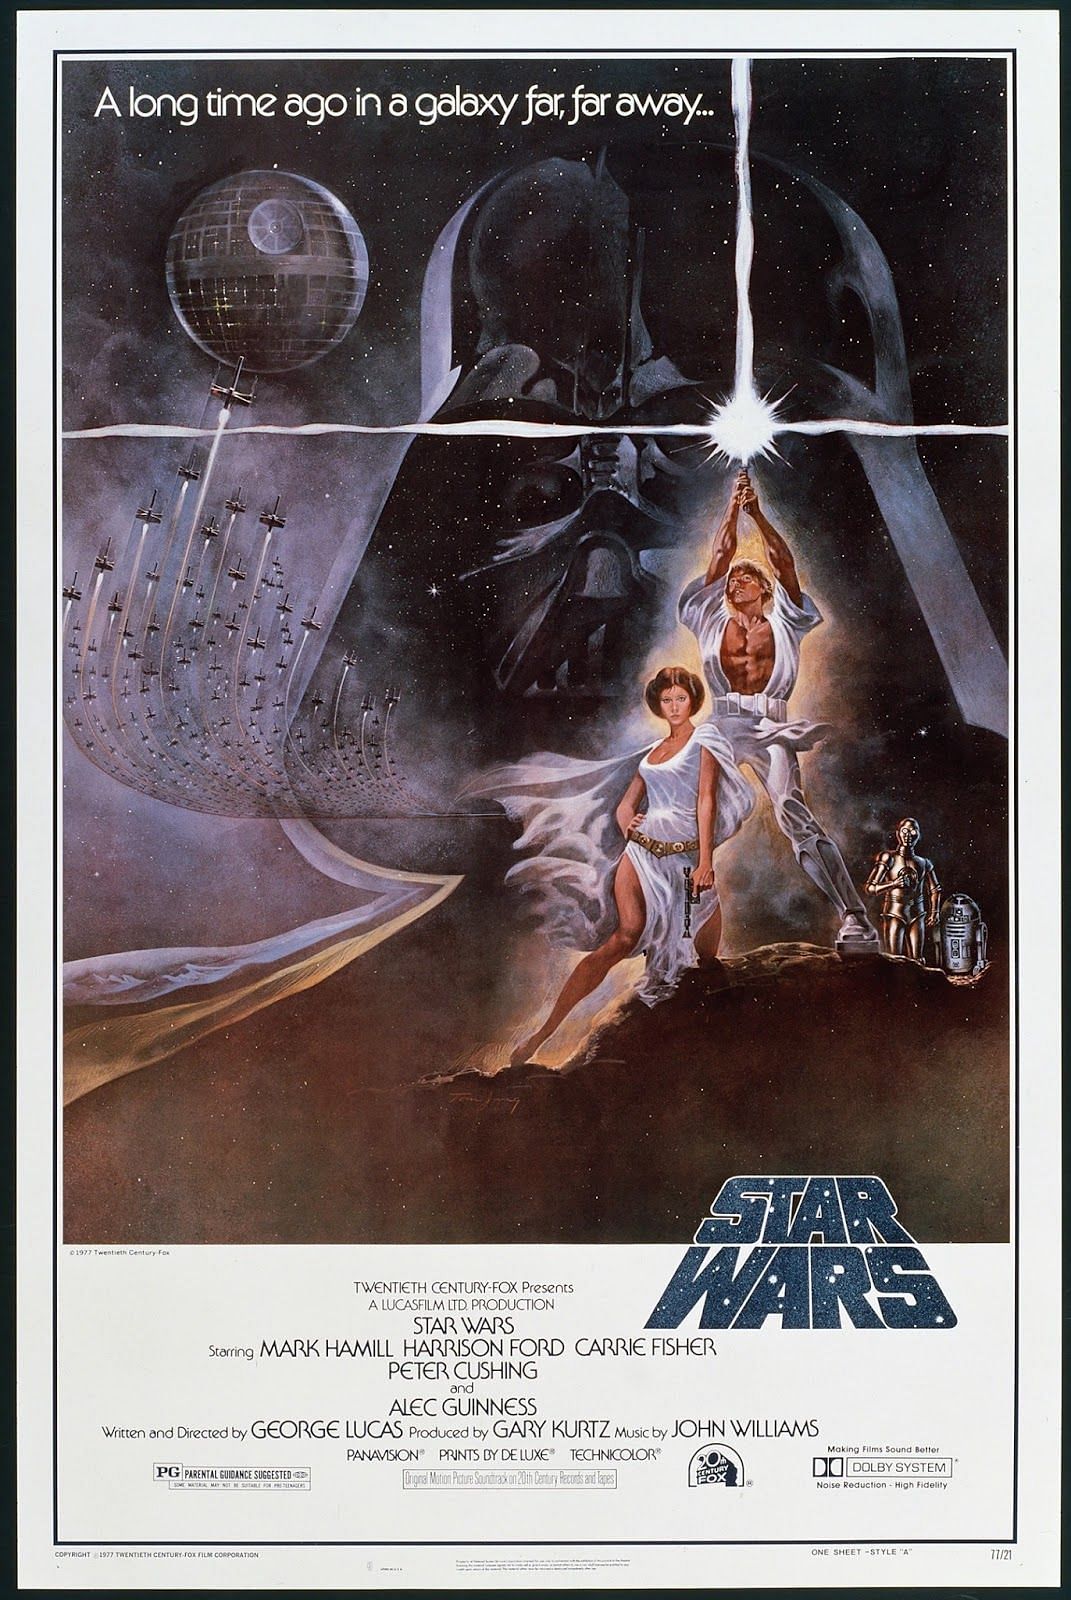 Star Wars Episode IV: A New Hope (1977)